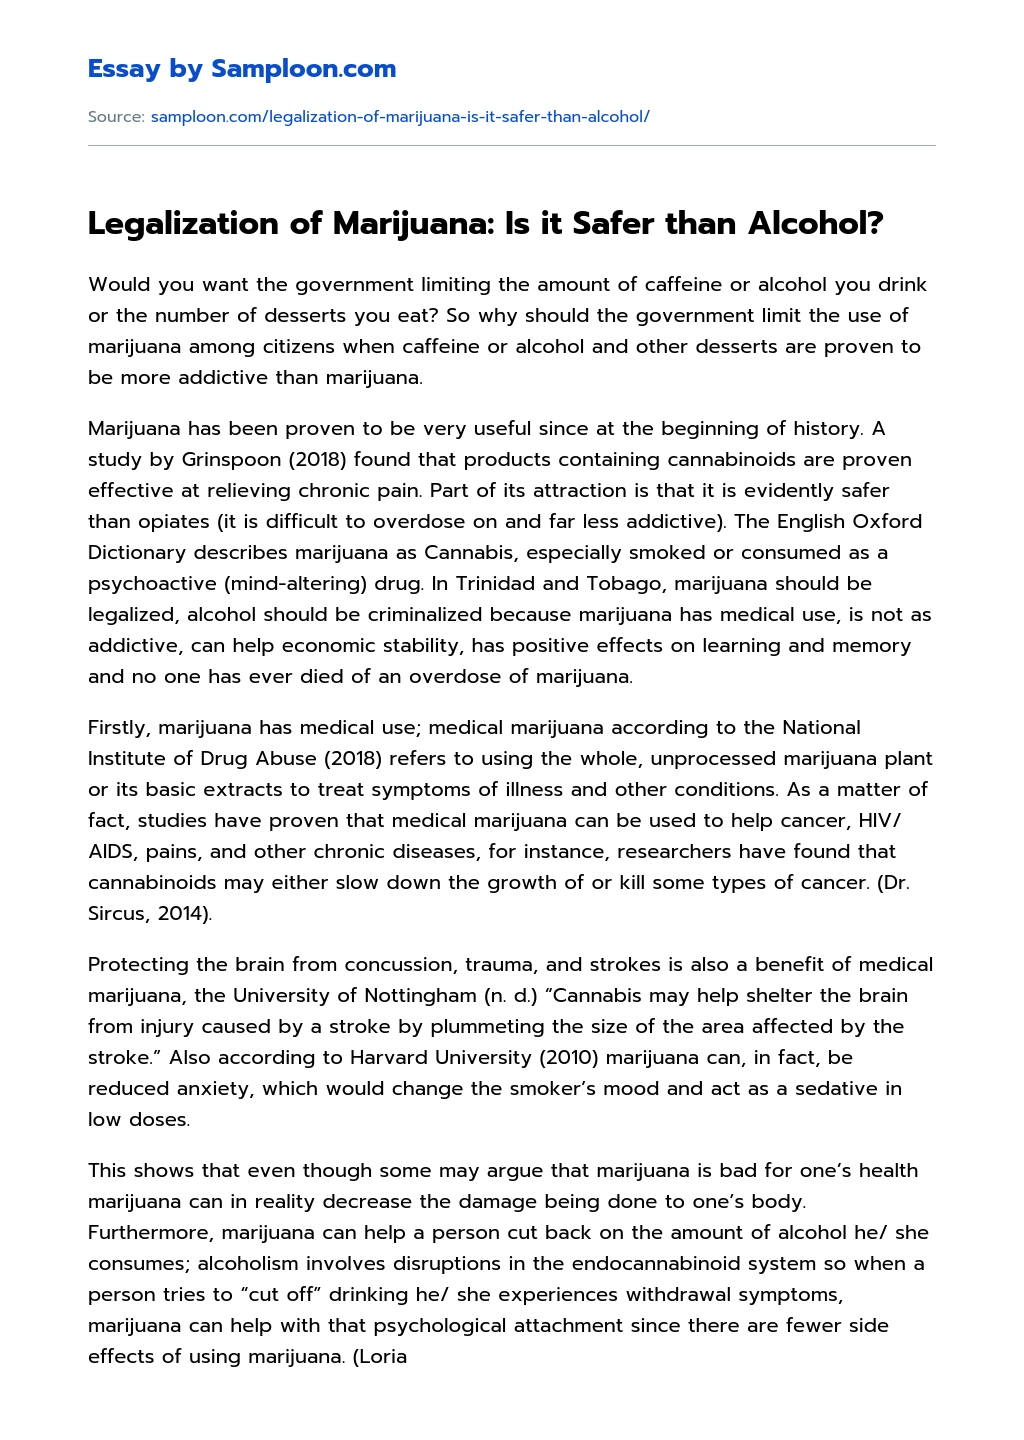 Legalization of Marijuana: Is it Safer than Alcohol? essay